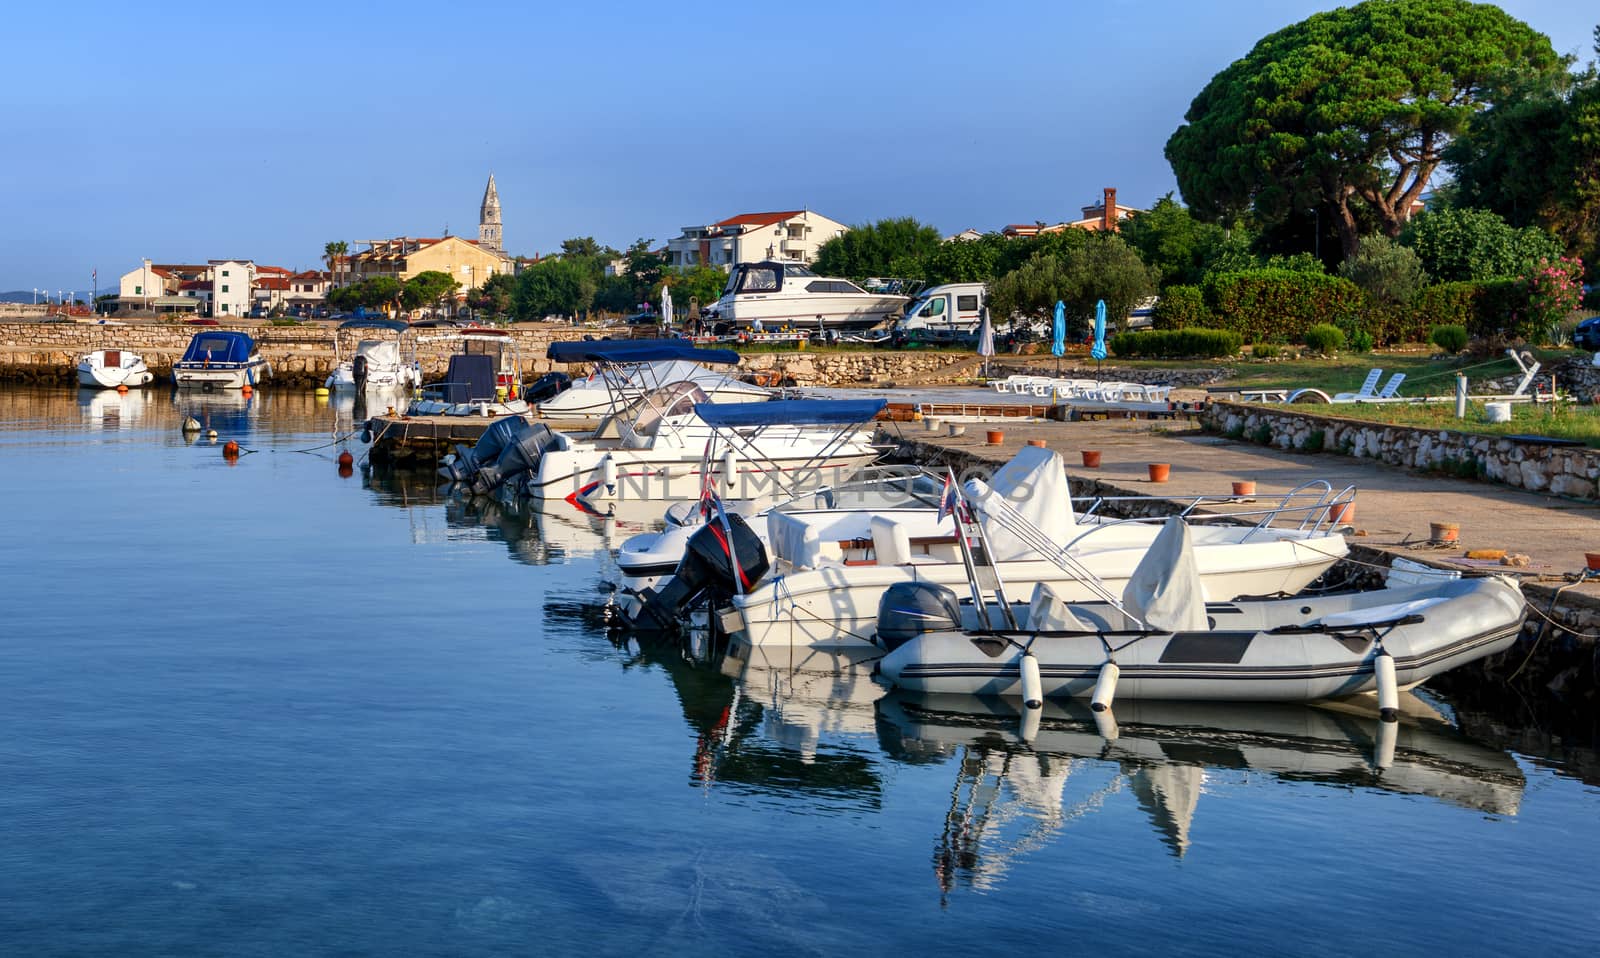 Turanj village harbor and waterfront view, Dalmatia, Croatia by asafaric